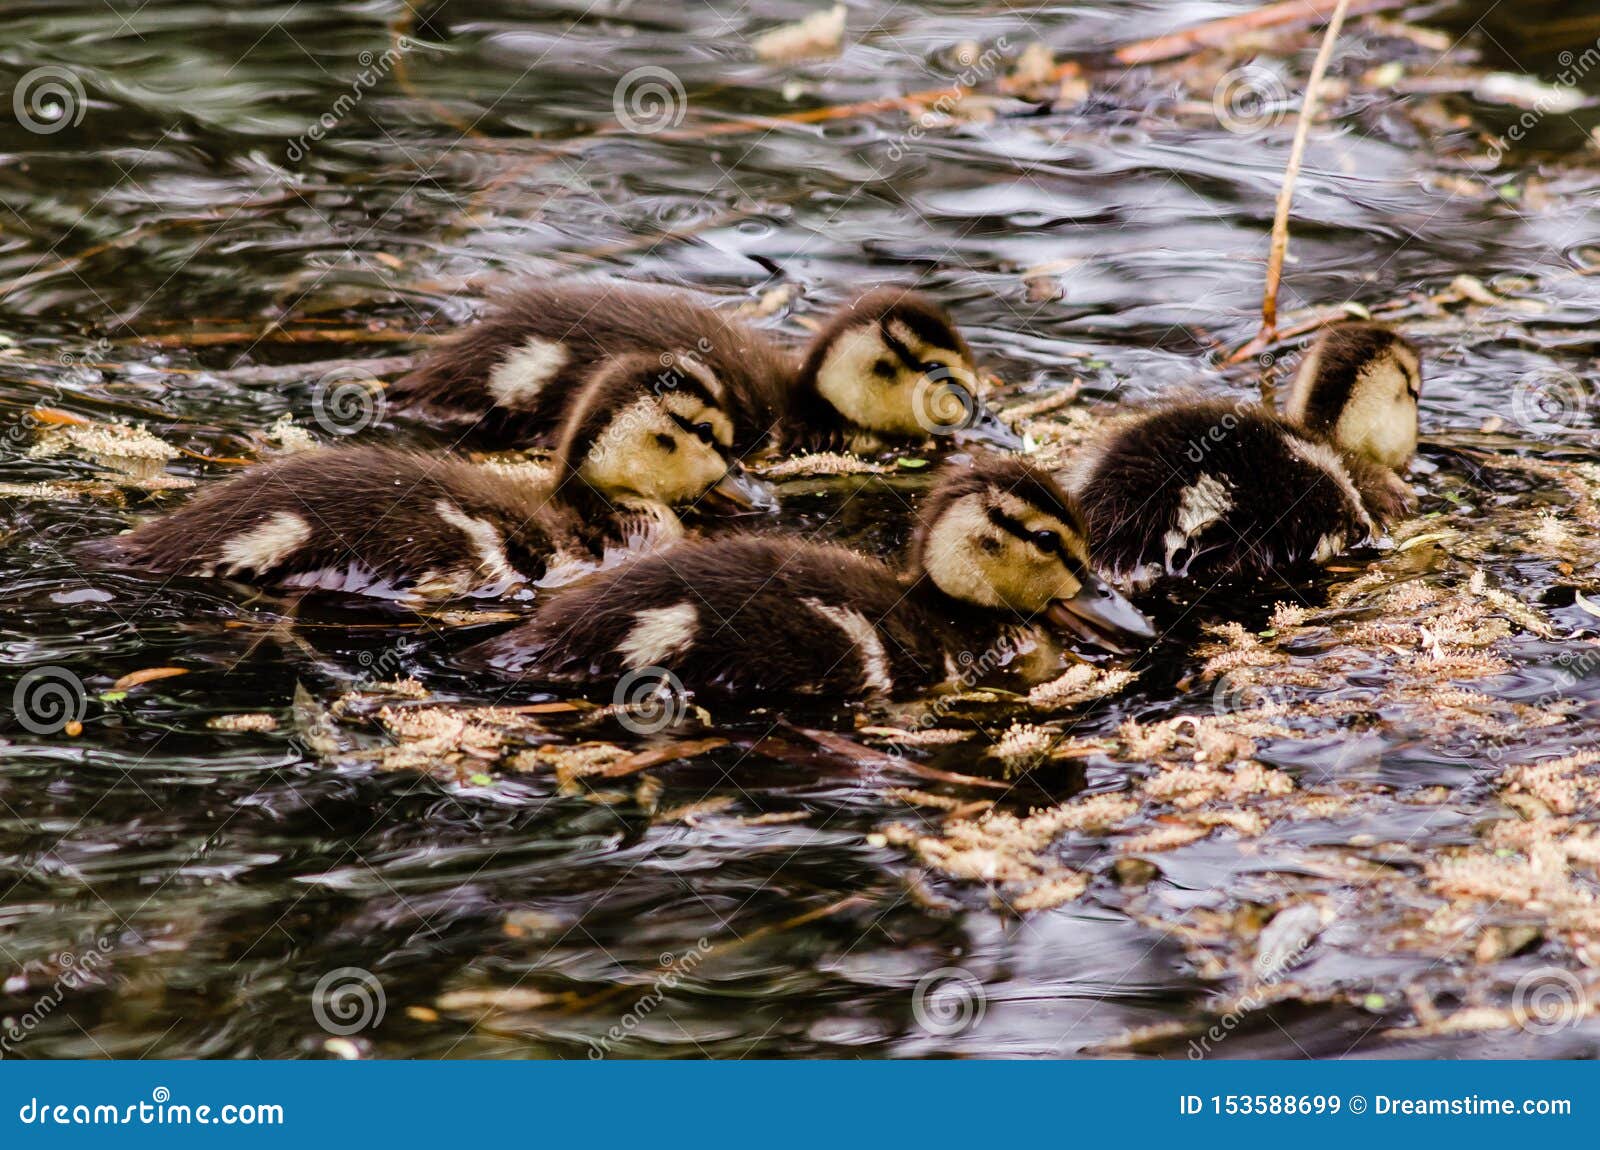 four mallard ducklings huddled in a feeding frenzy gobbling as much as they can